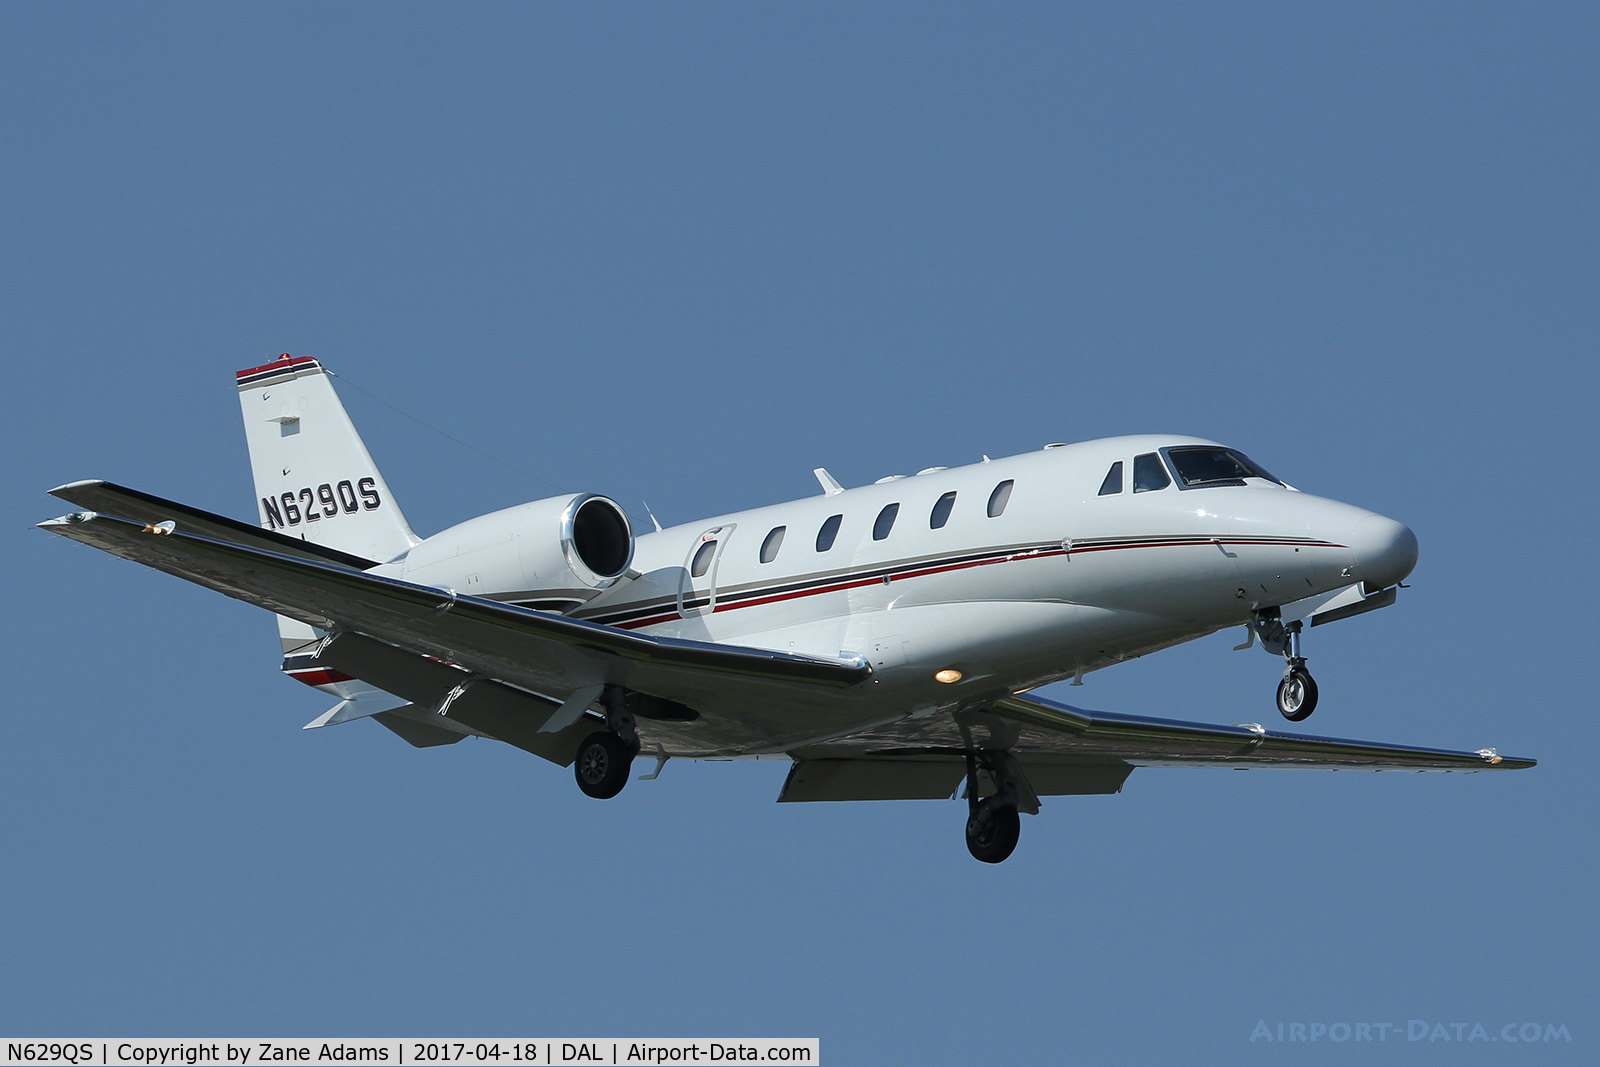 N629QS, 2002 Cessna 560 Citation Excel C/N 560-5306, Arriving at Dallas Love Field